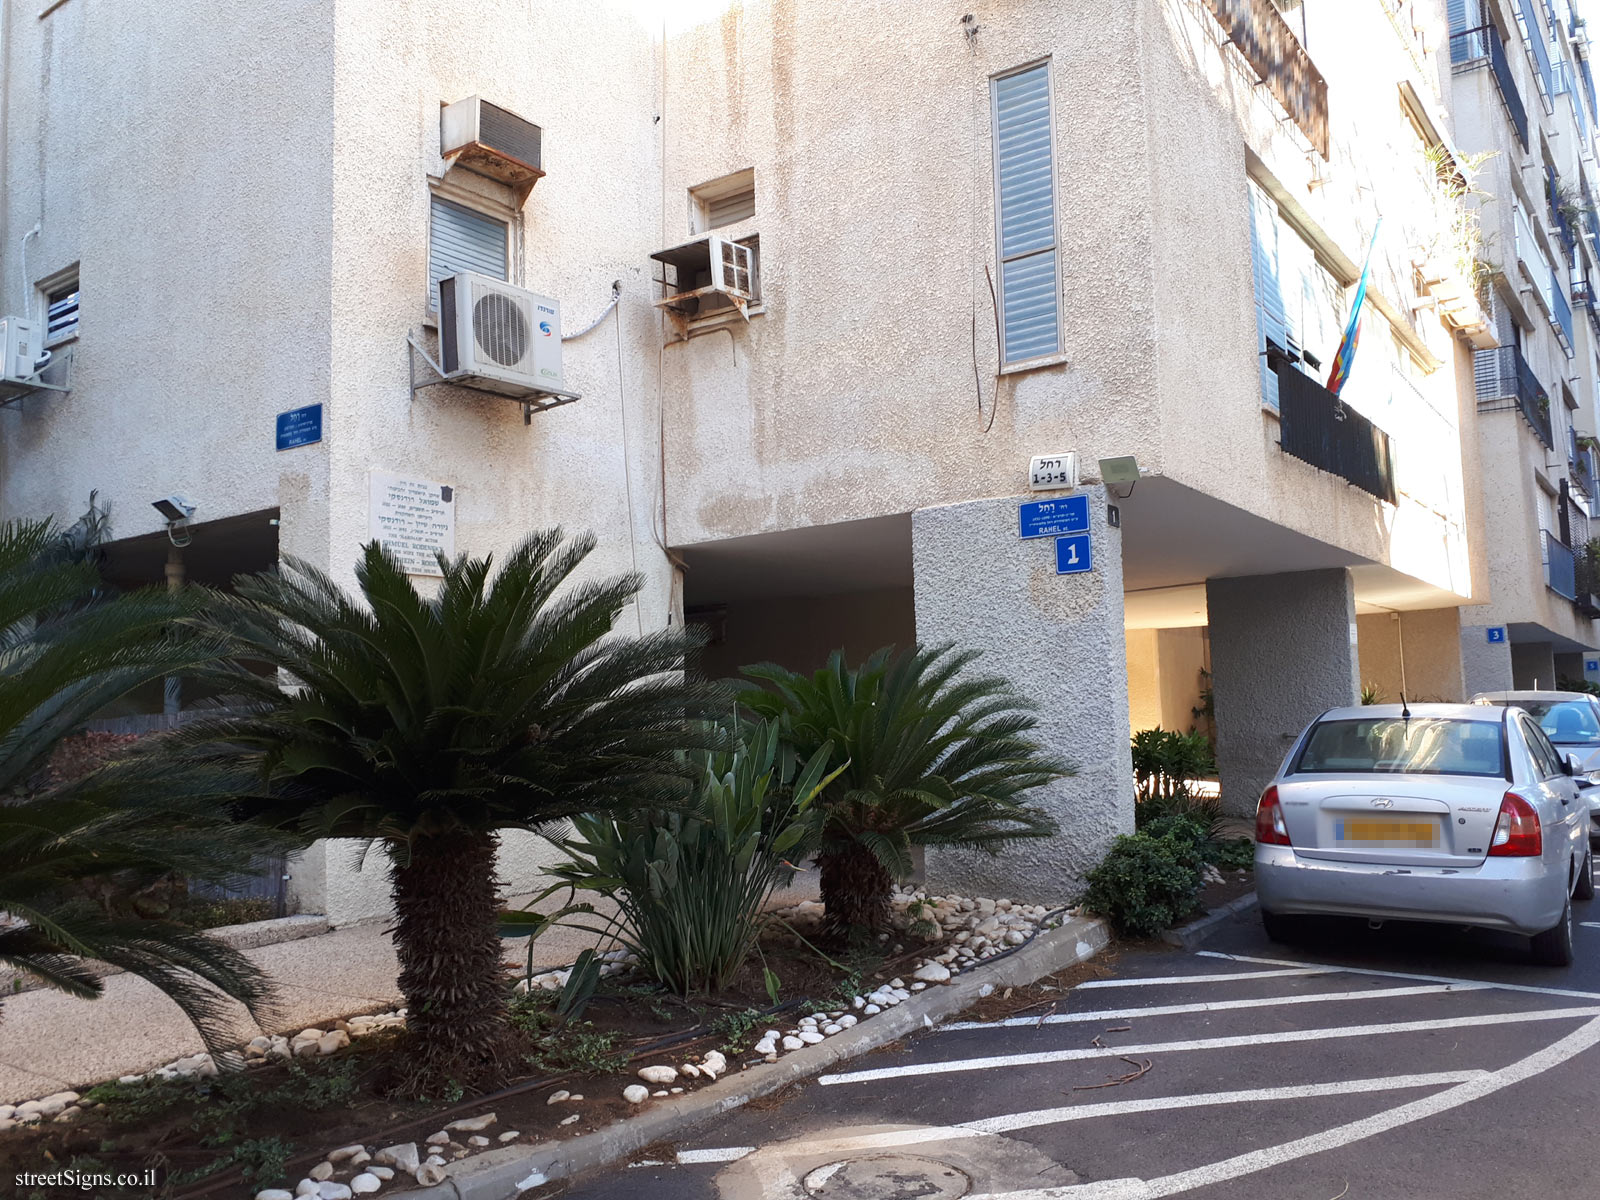 The house of Shmeul Rodensky, Nura Shein Rodensky - Rakhel St 1, Tel Aviv-Yafo, Israel